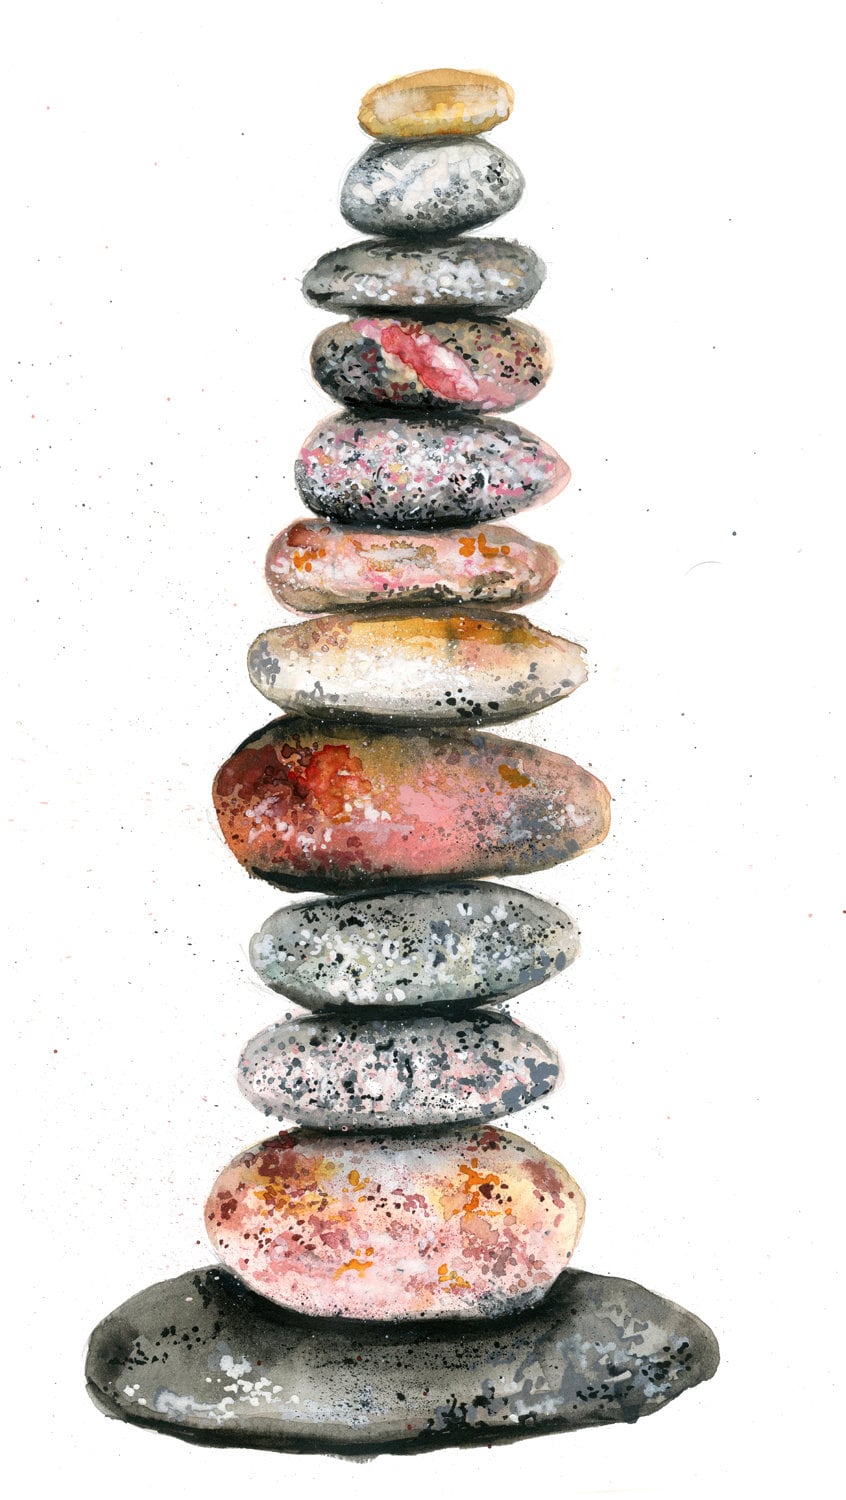 Living stones IV - original watercolor painting